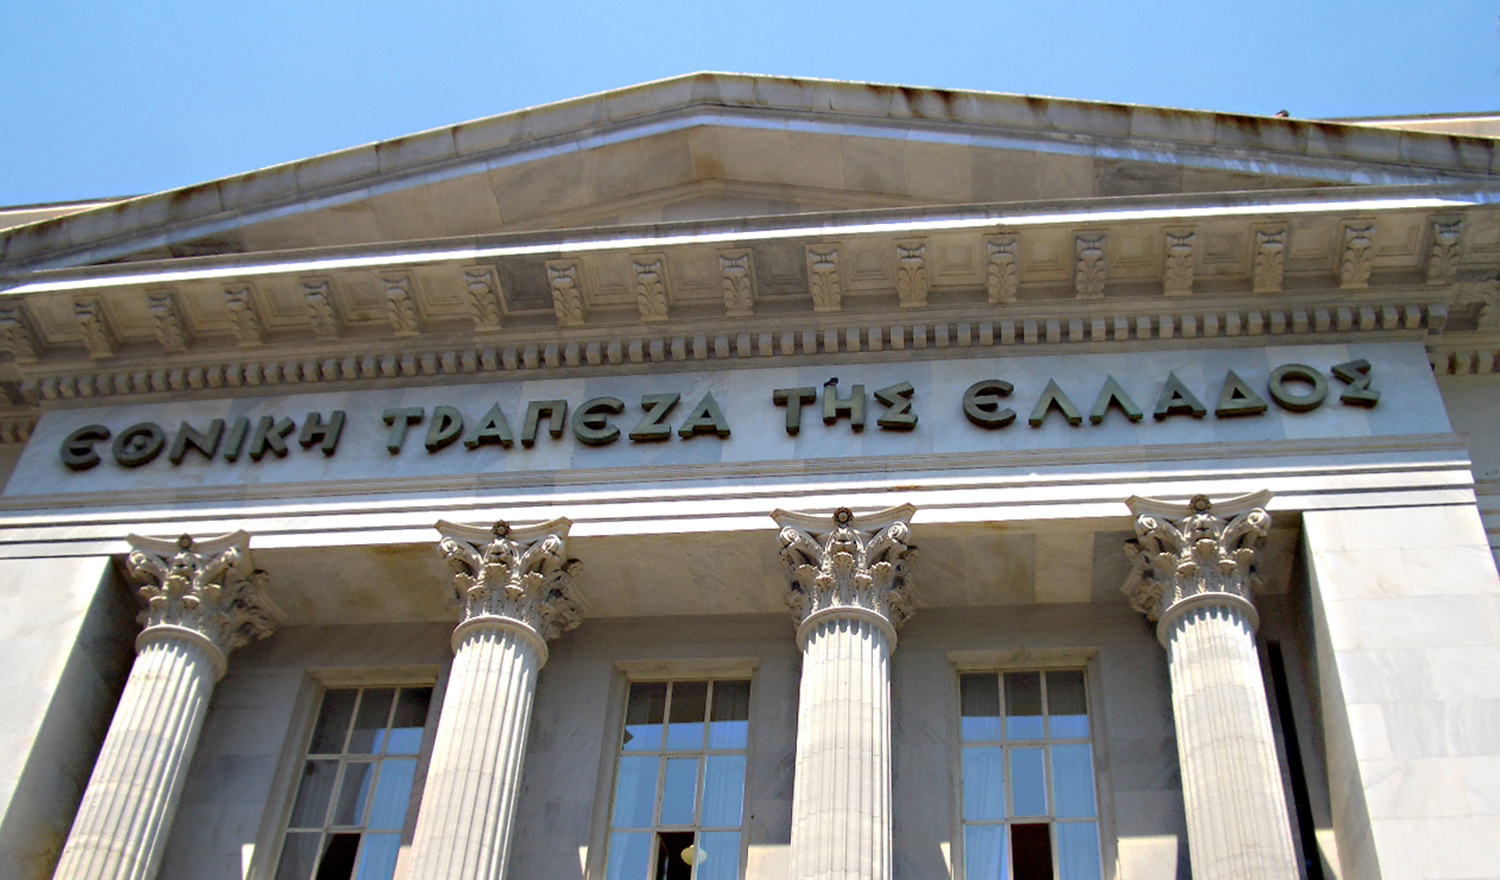 national bank of greece business plan